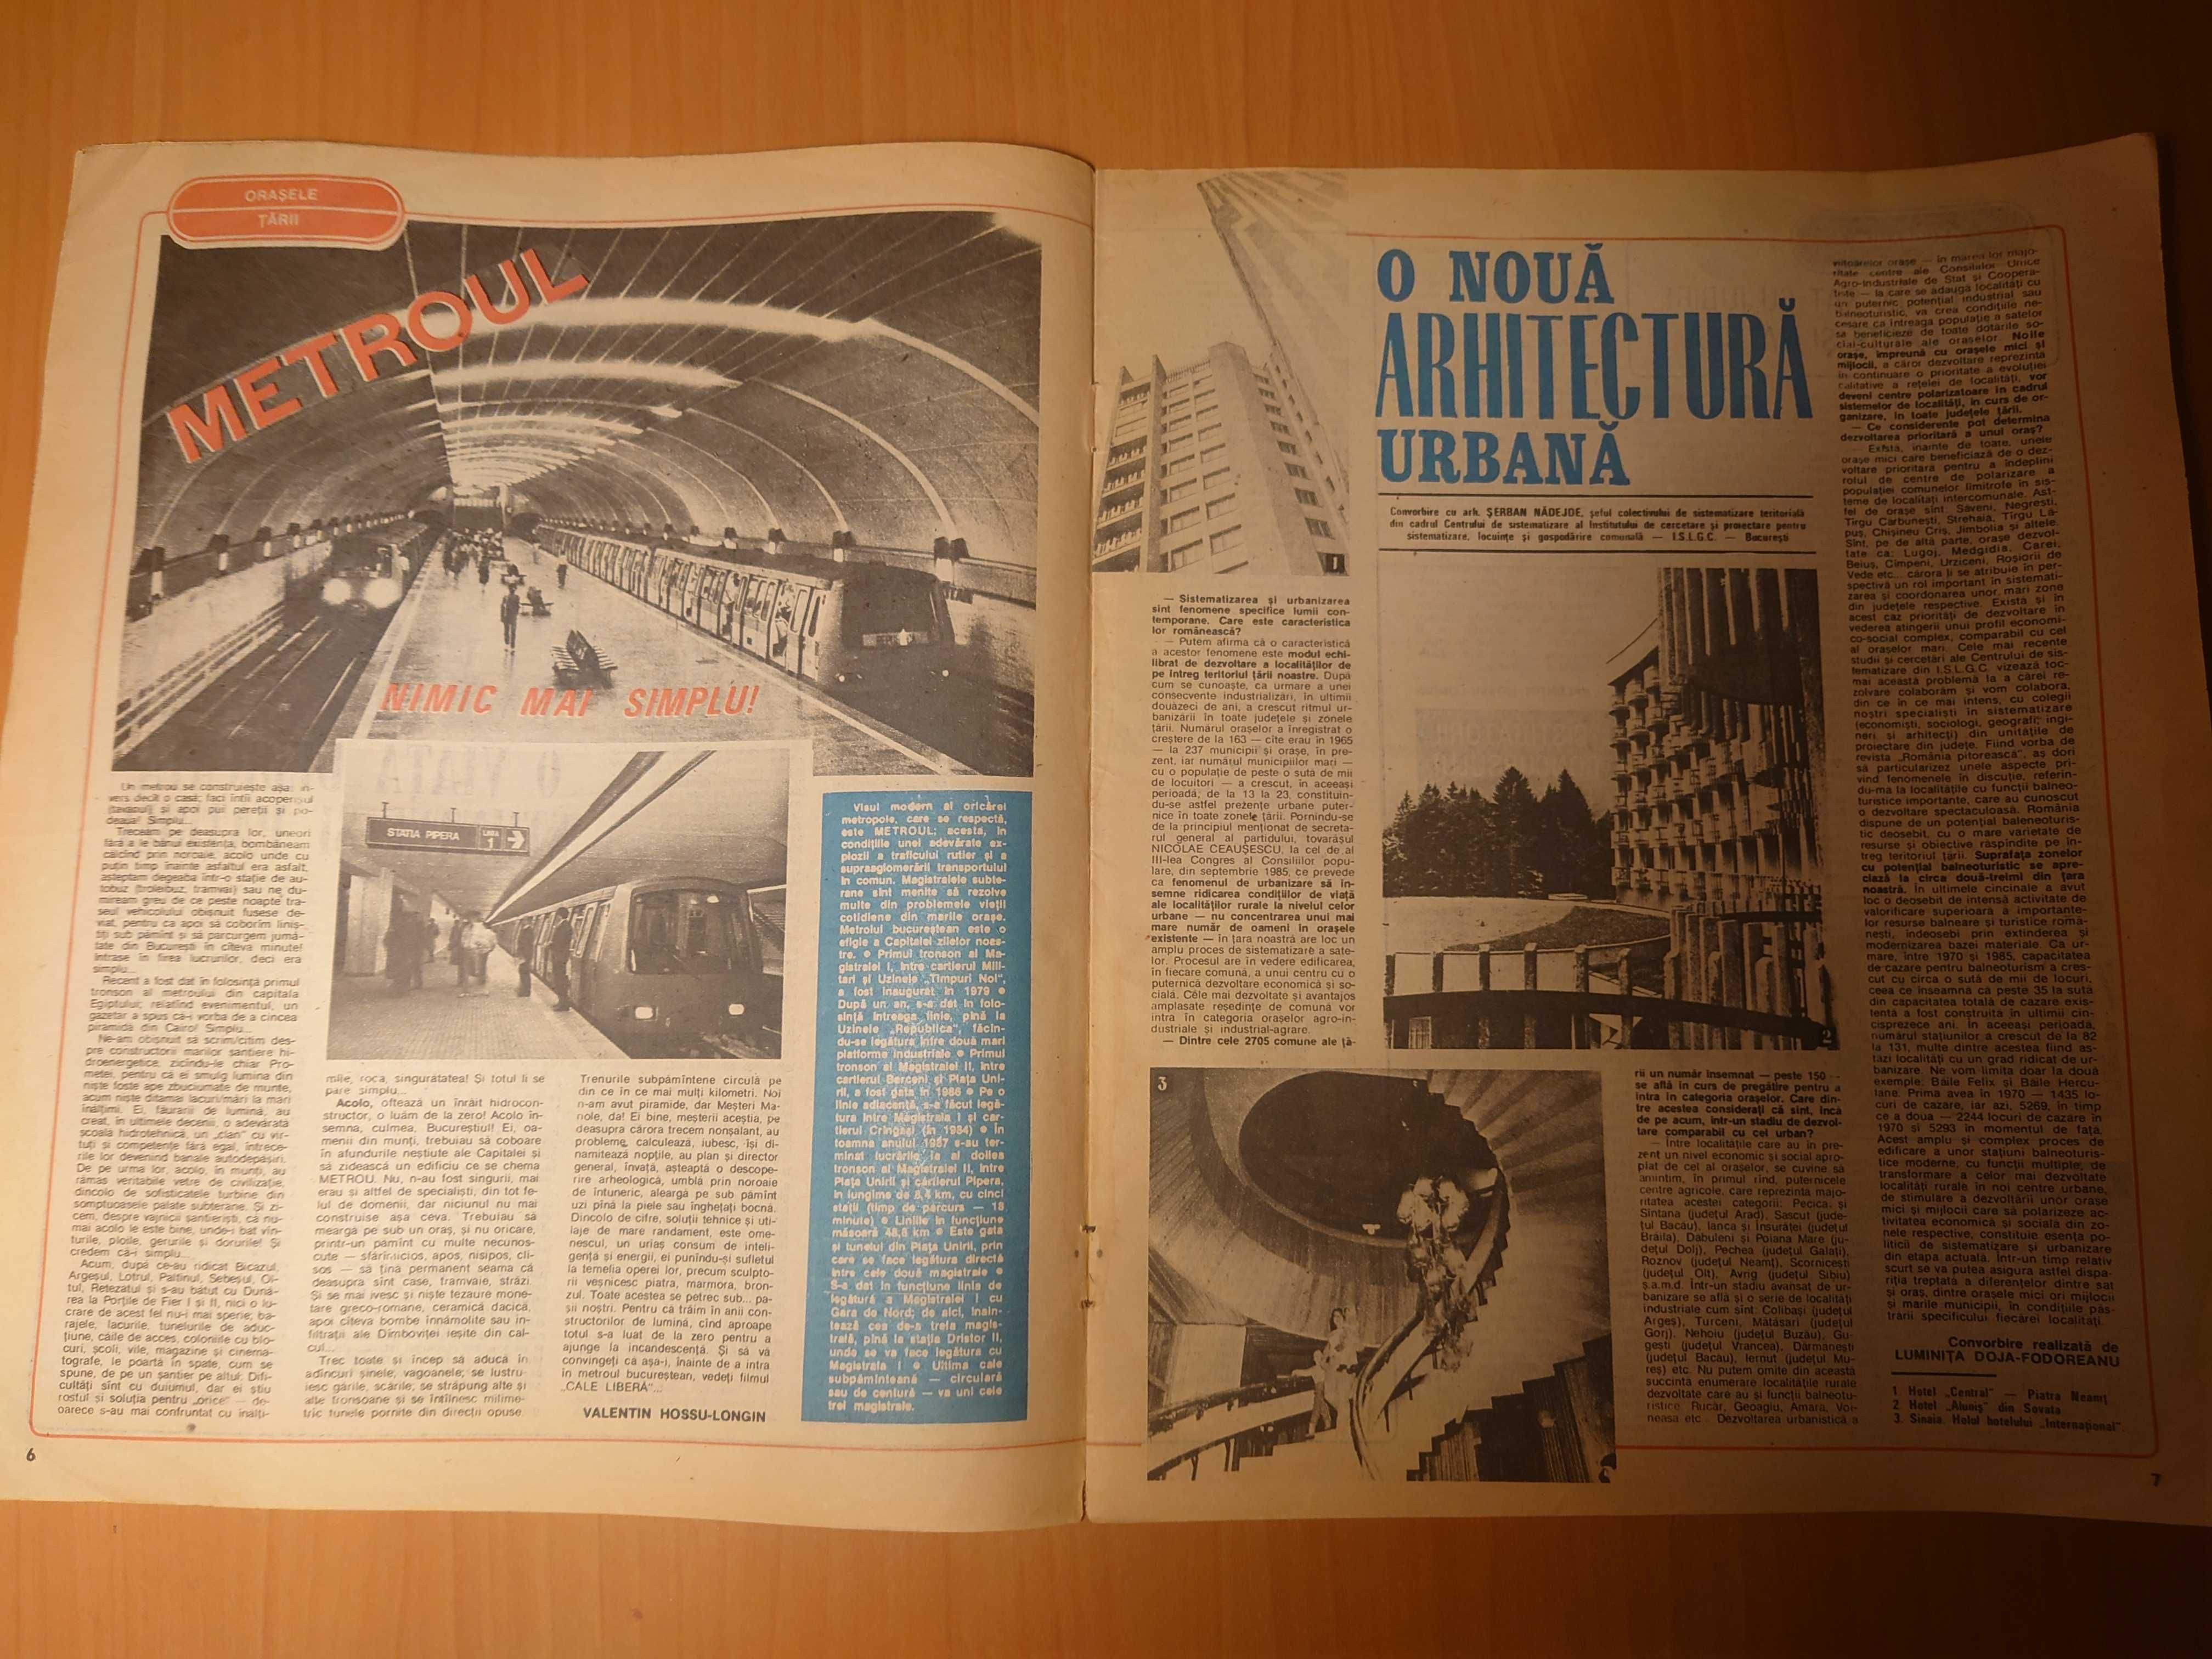 Revista Romania Pitoreasca nr. 1, ian. 1988 - Nicolae Ceausescu